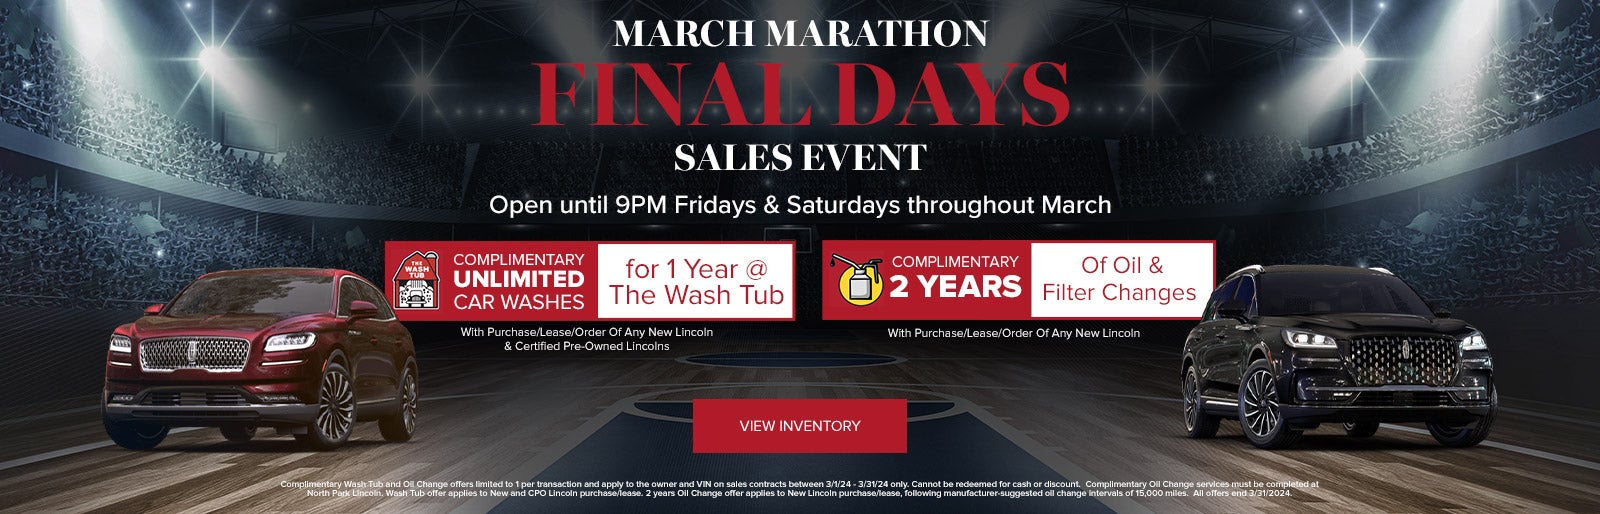 Final Days March Marathon Sales Event at Lincoln Dominion!